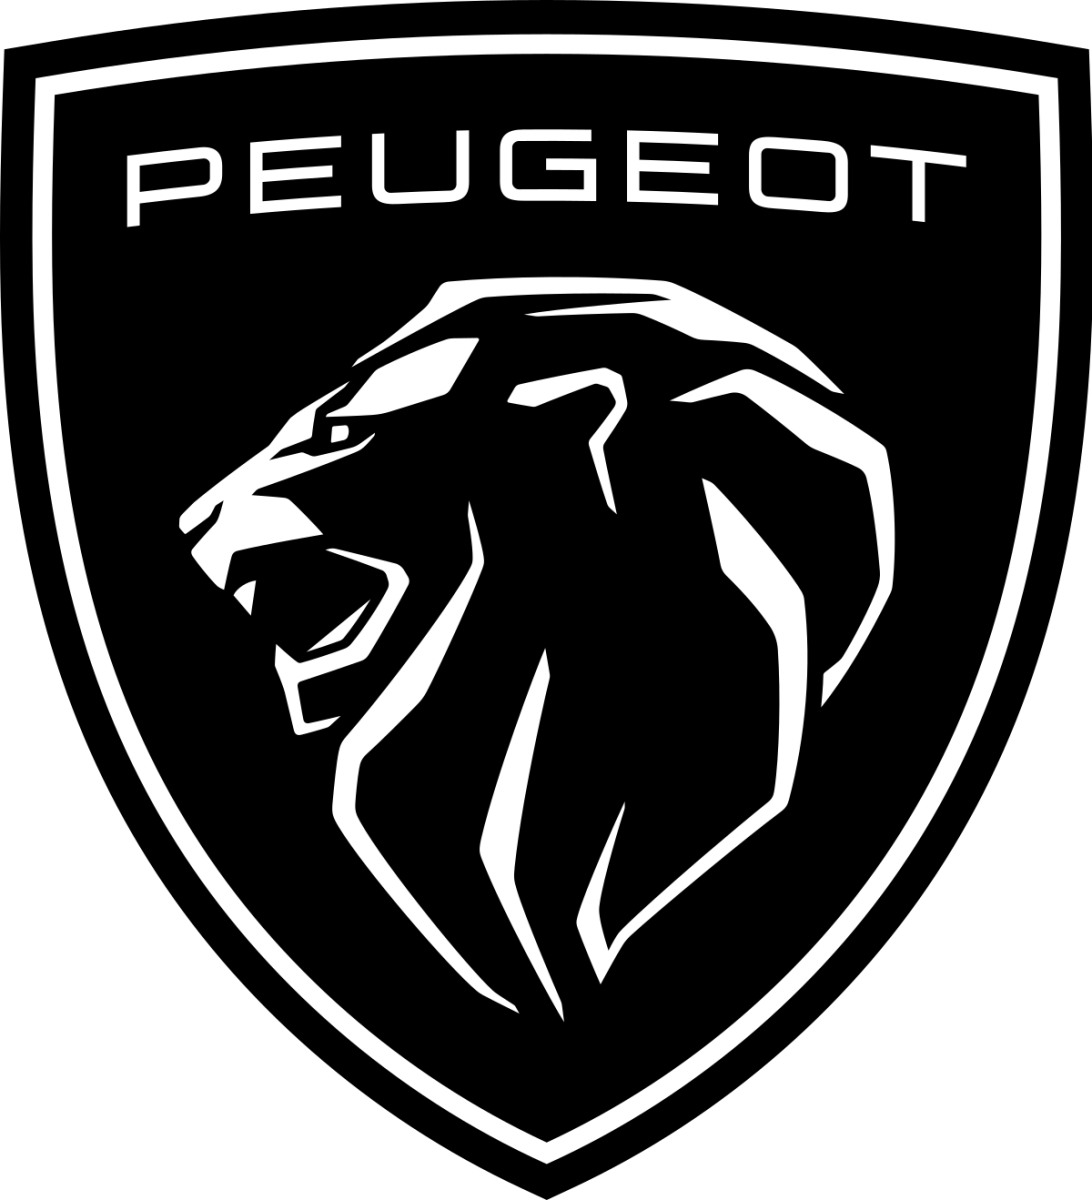 Peugeot Bình Dương